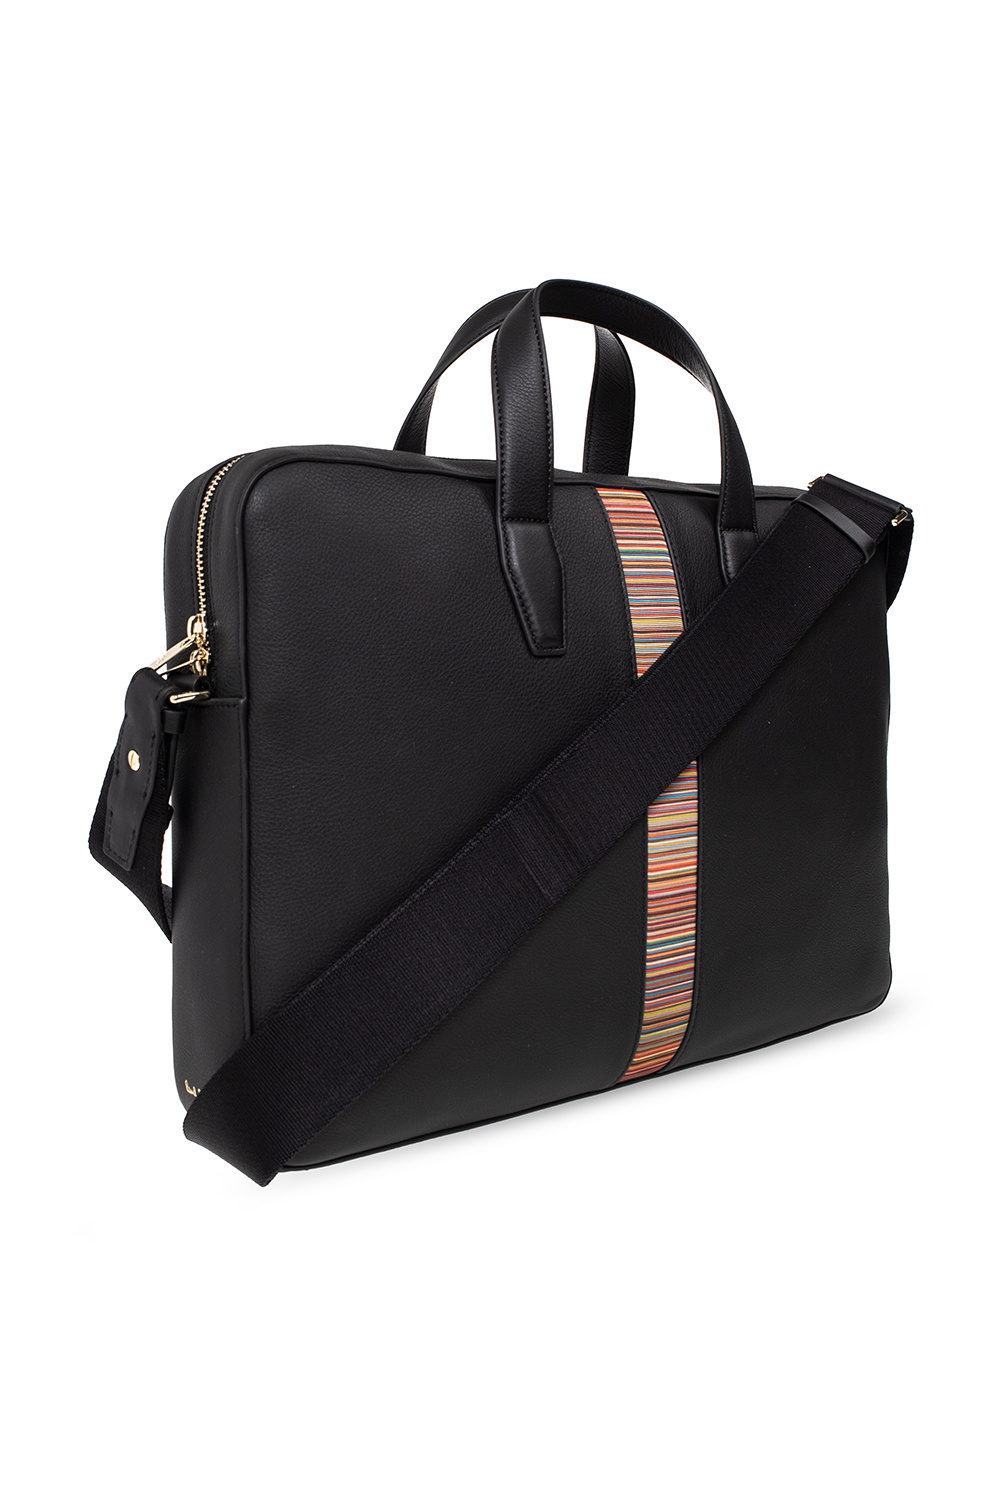 Paul Smith Louis Vuitton Soft Lockit Bag